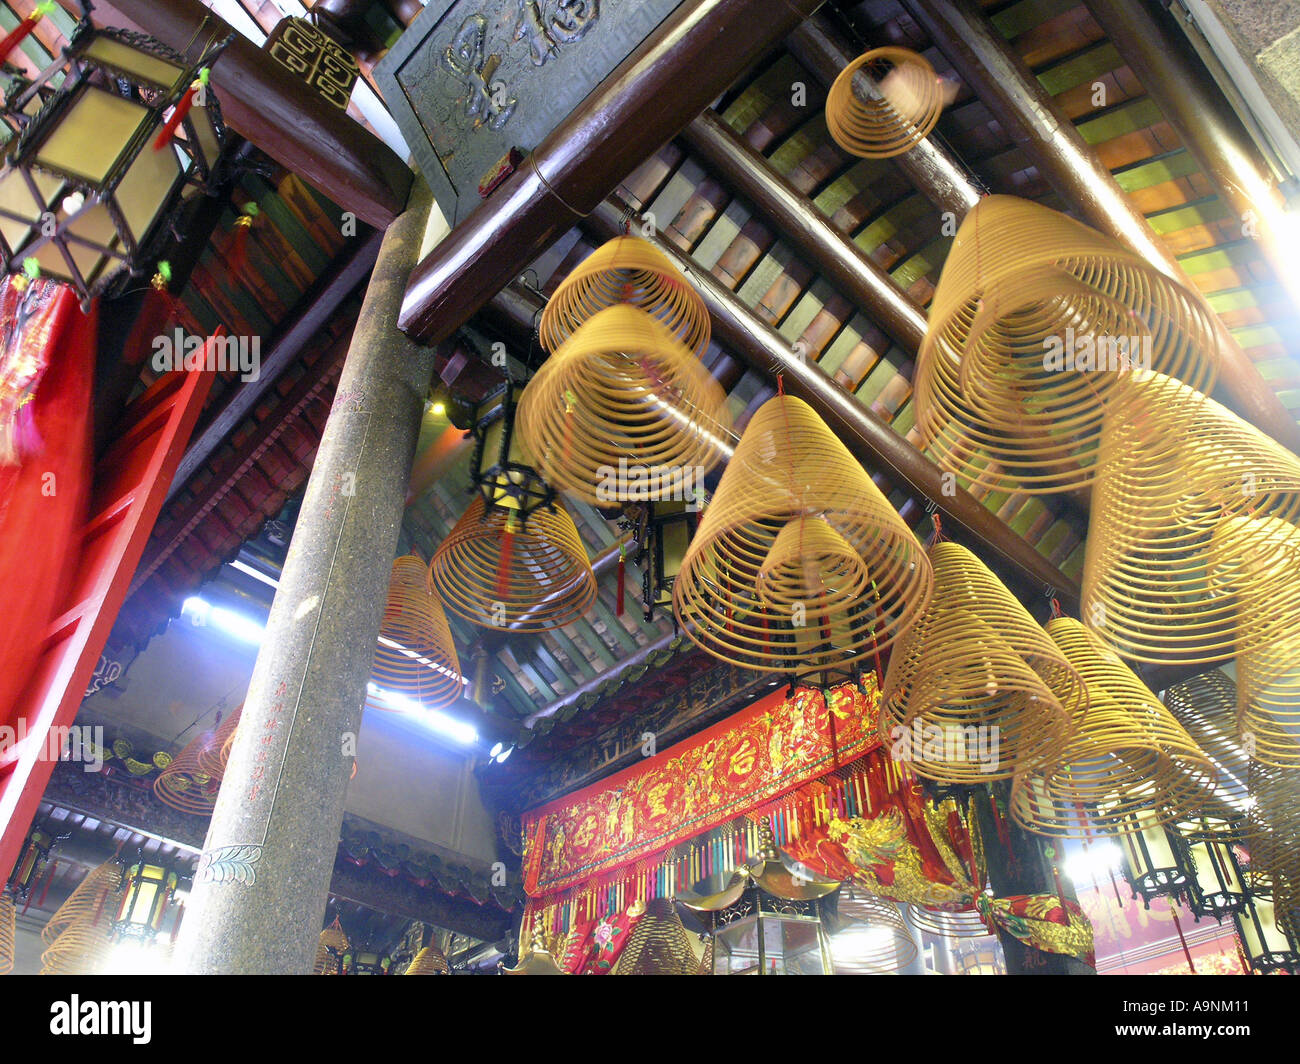 Tinhau tin hau temple at Tinhau station north point Hong Kong china Stock Photo